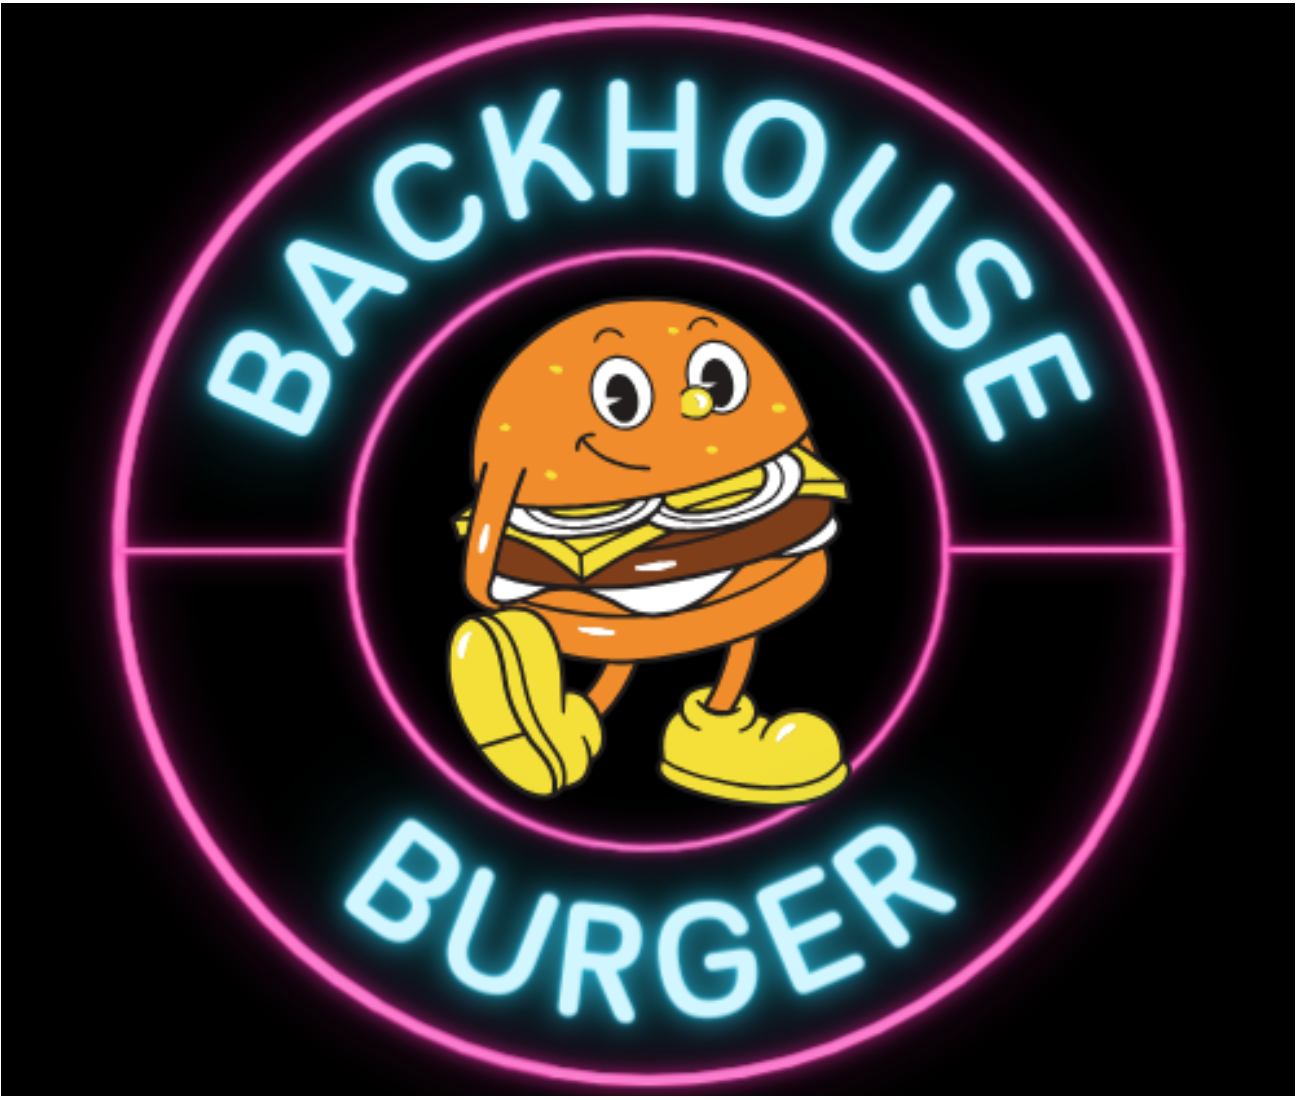 Backhouse Burger